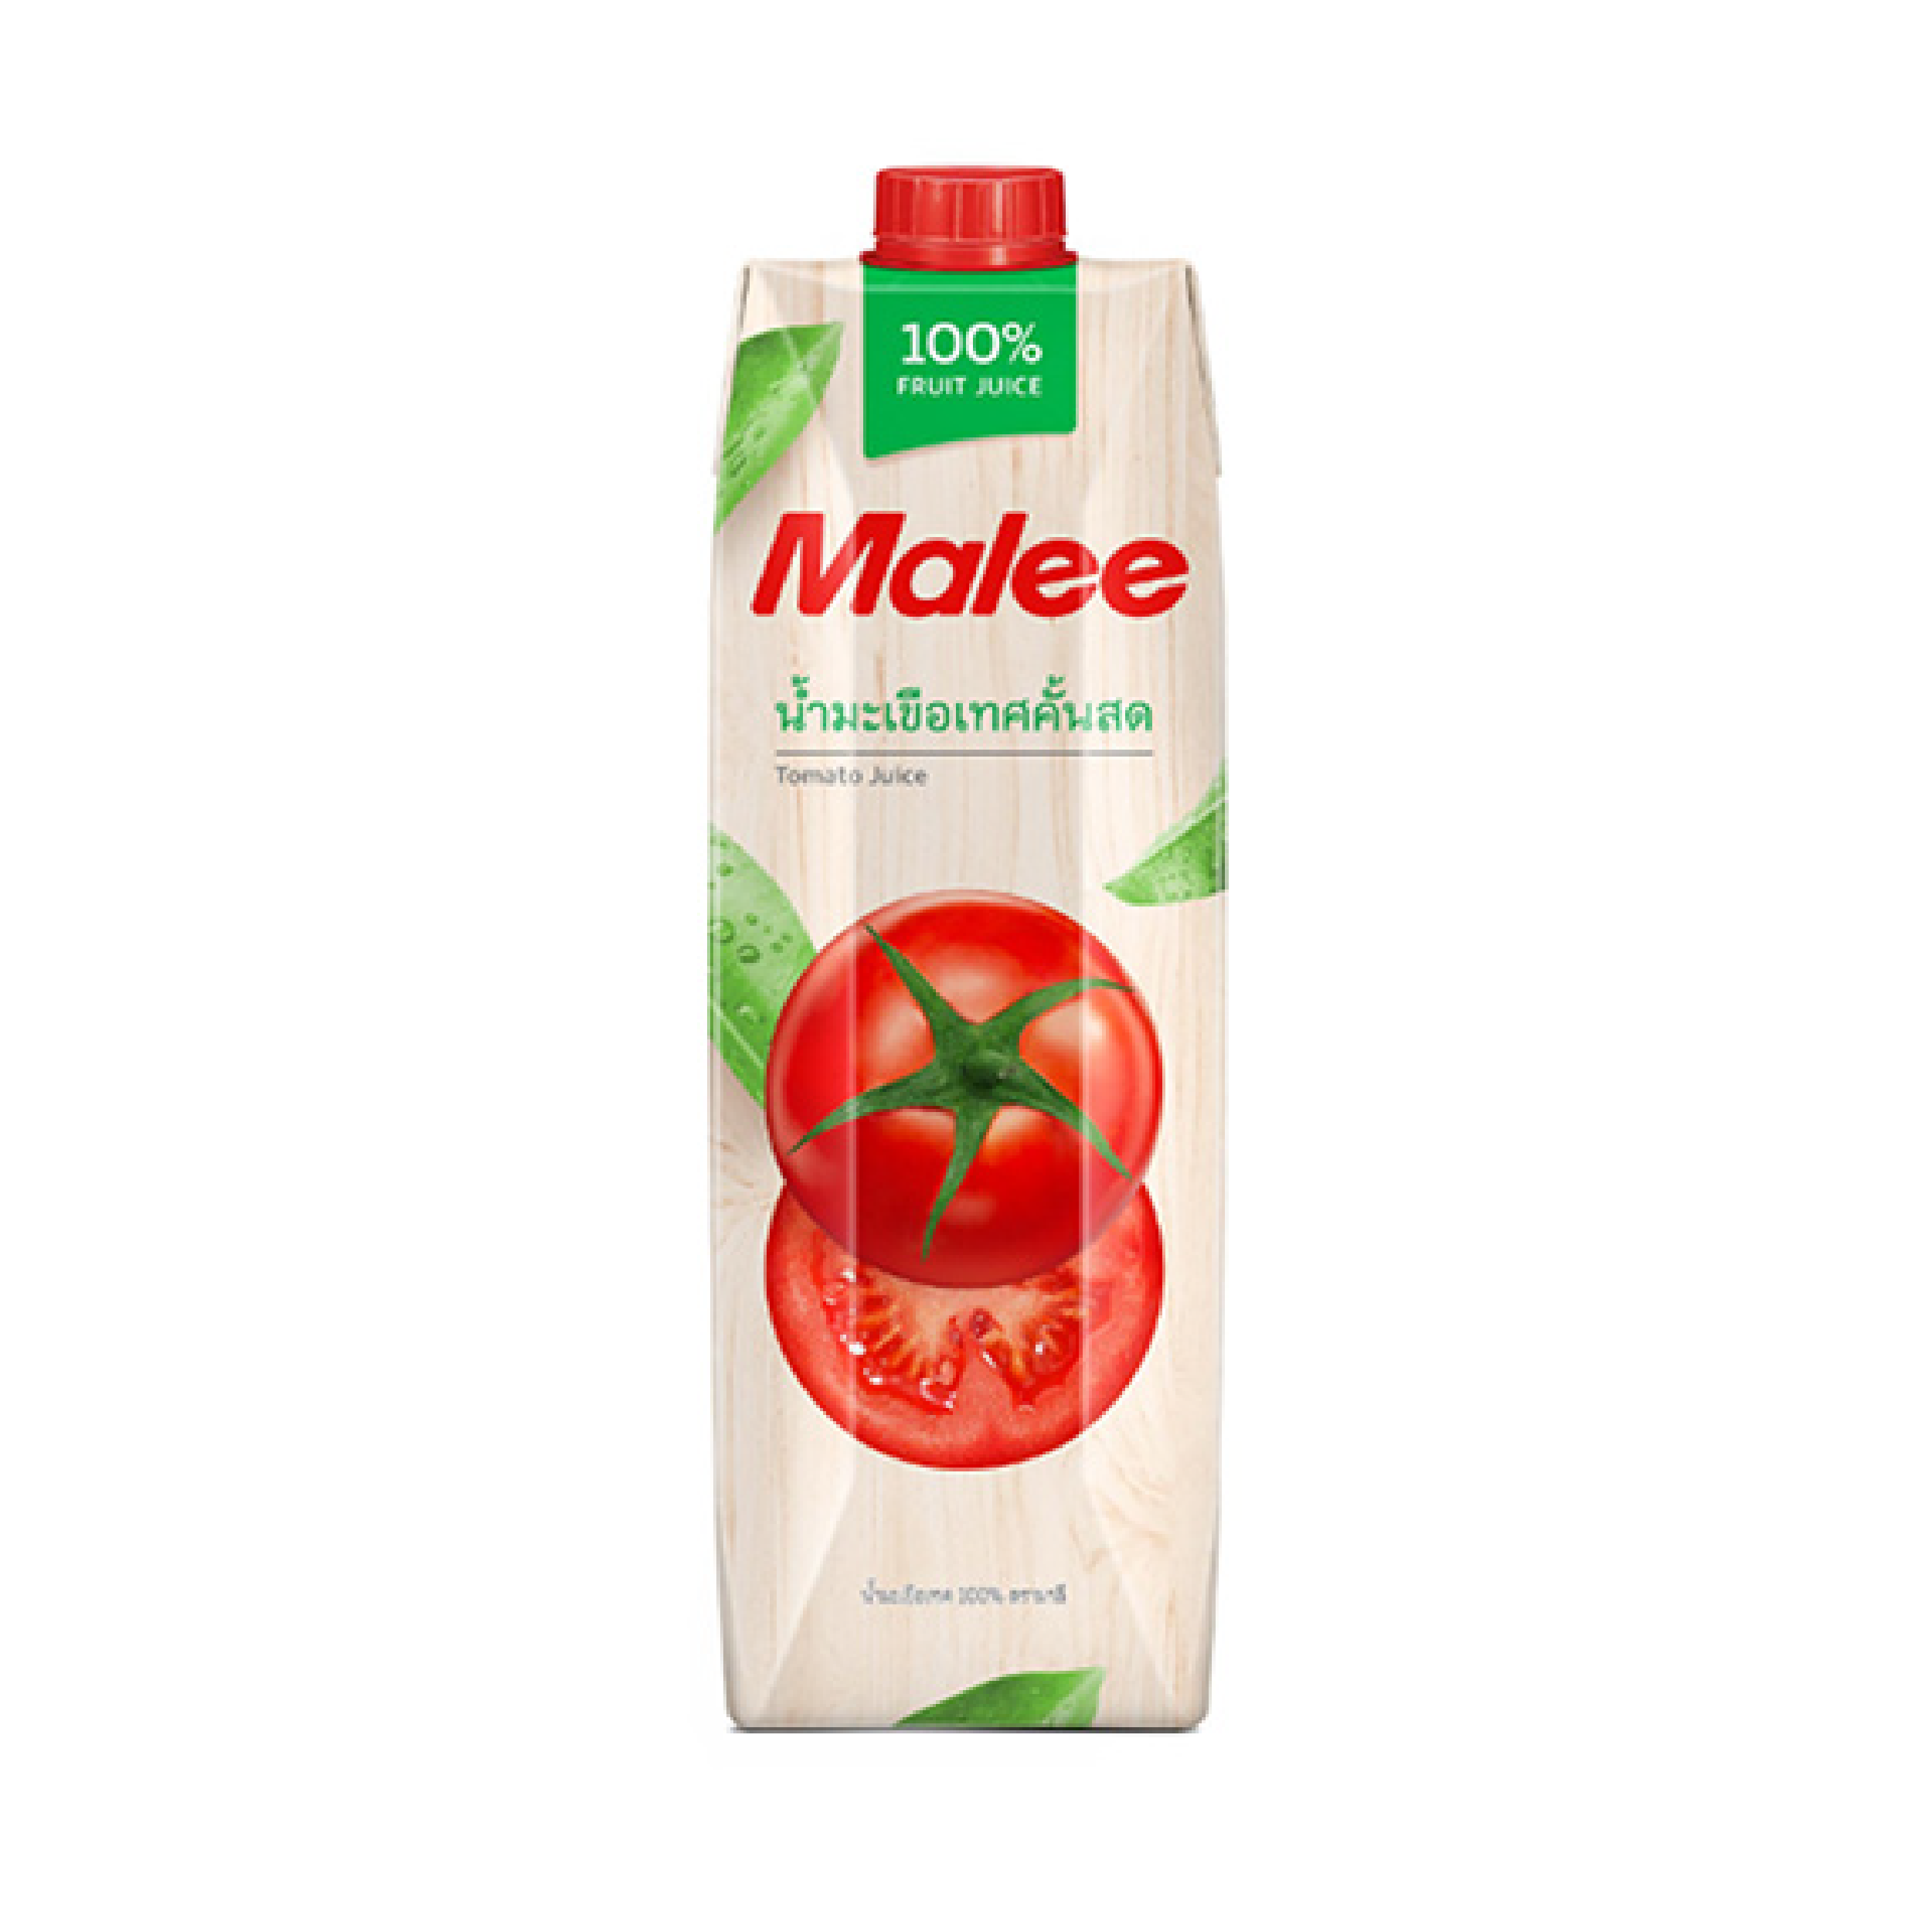 Malee Tomato Juice 1l - S Liquor